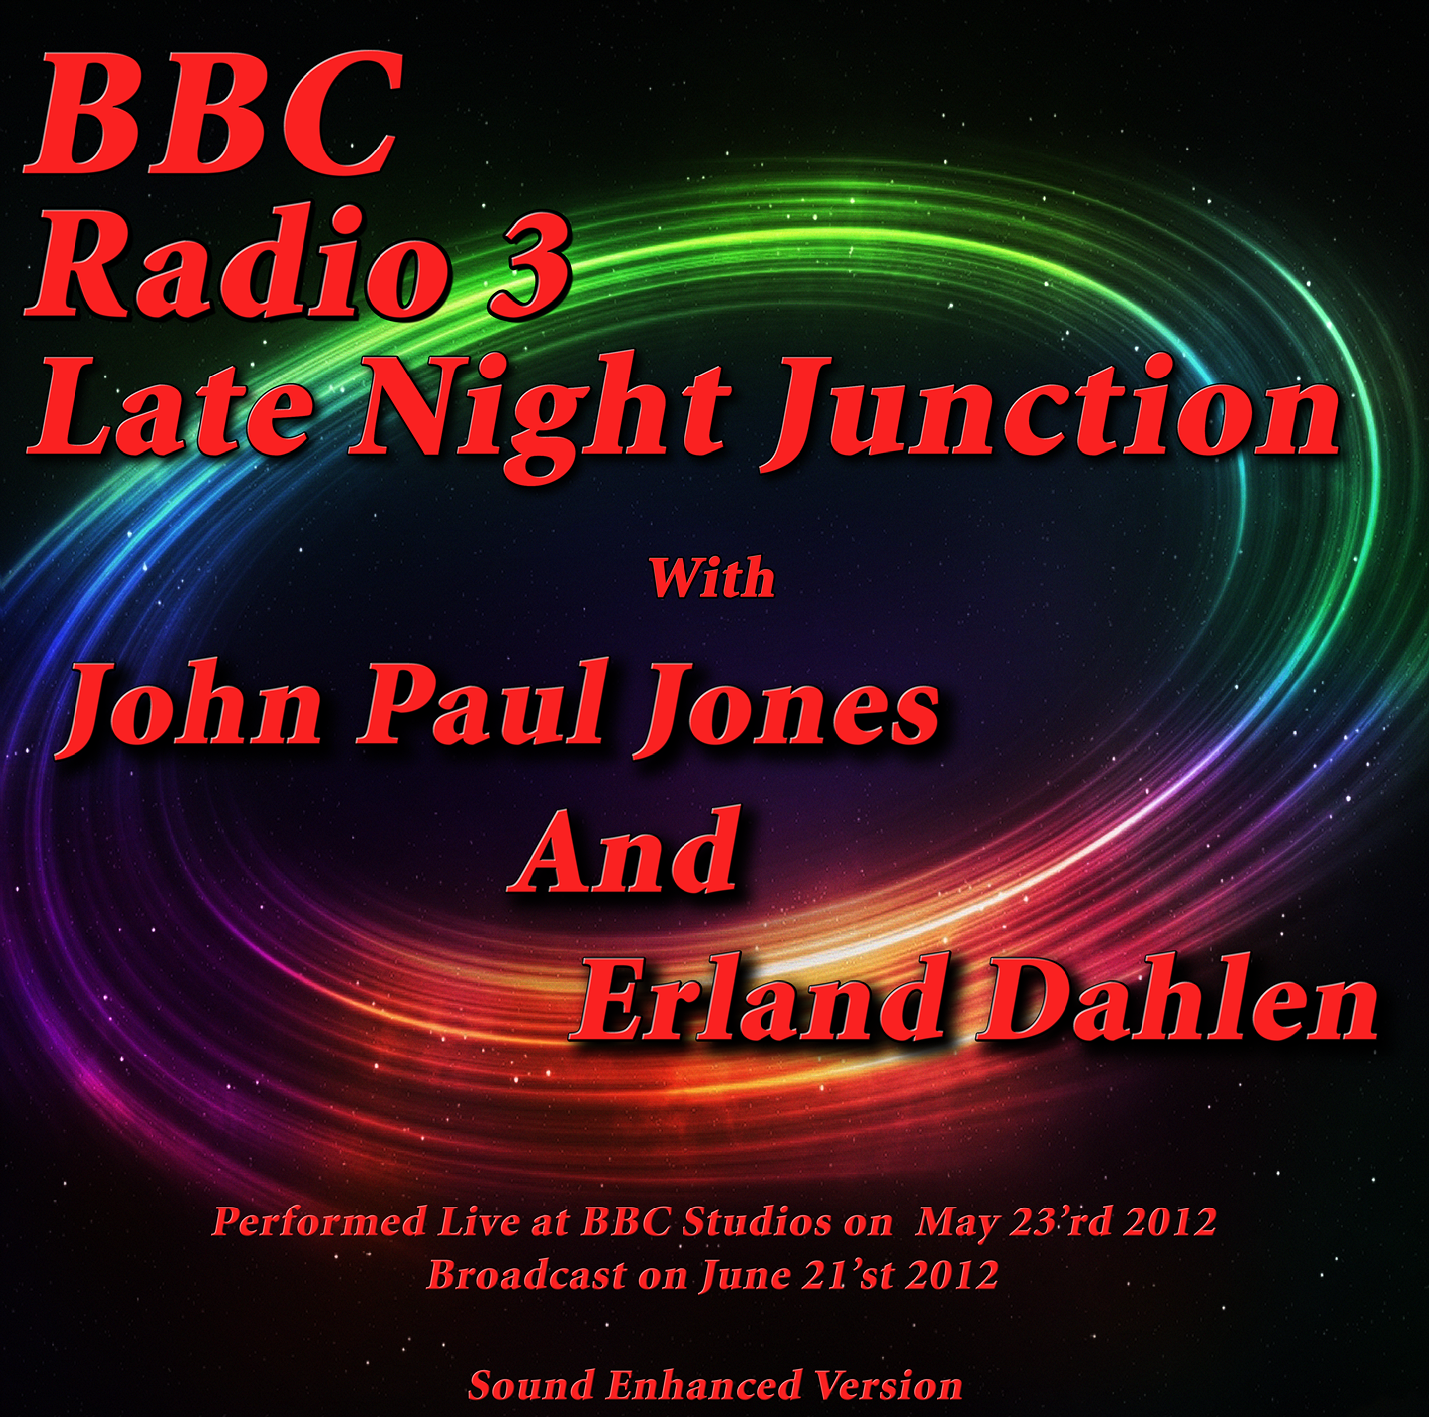 JohnPaulJonesErlandDahlen2012-05-23BBCRadio3LateNightJunctionLondonUK (1).png